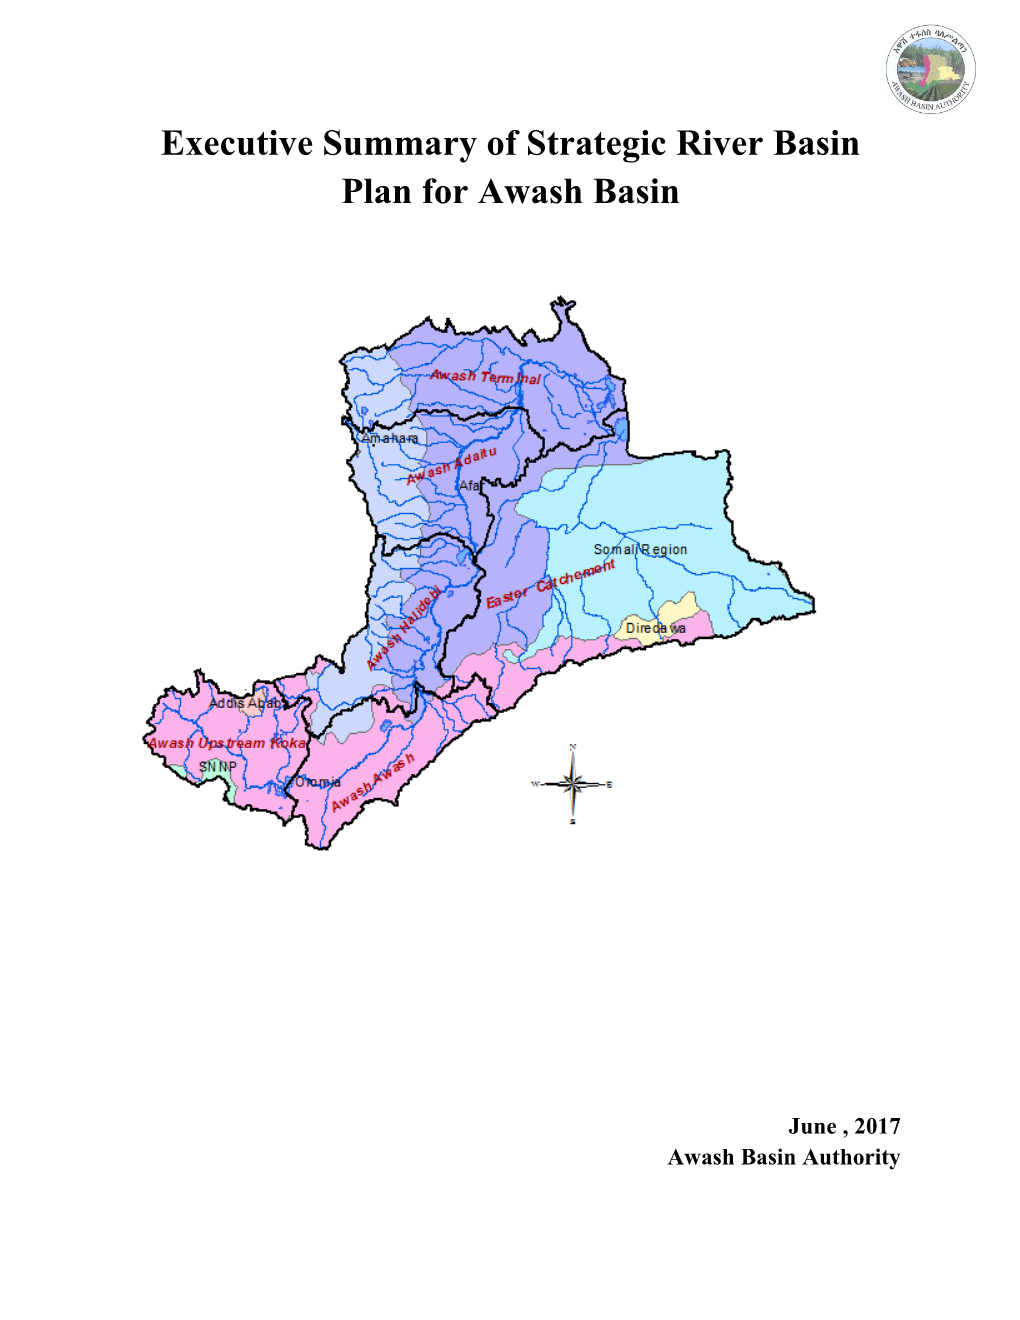 Executive Summary of Strategic River Basin Plan for Awash Basin